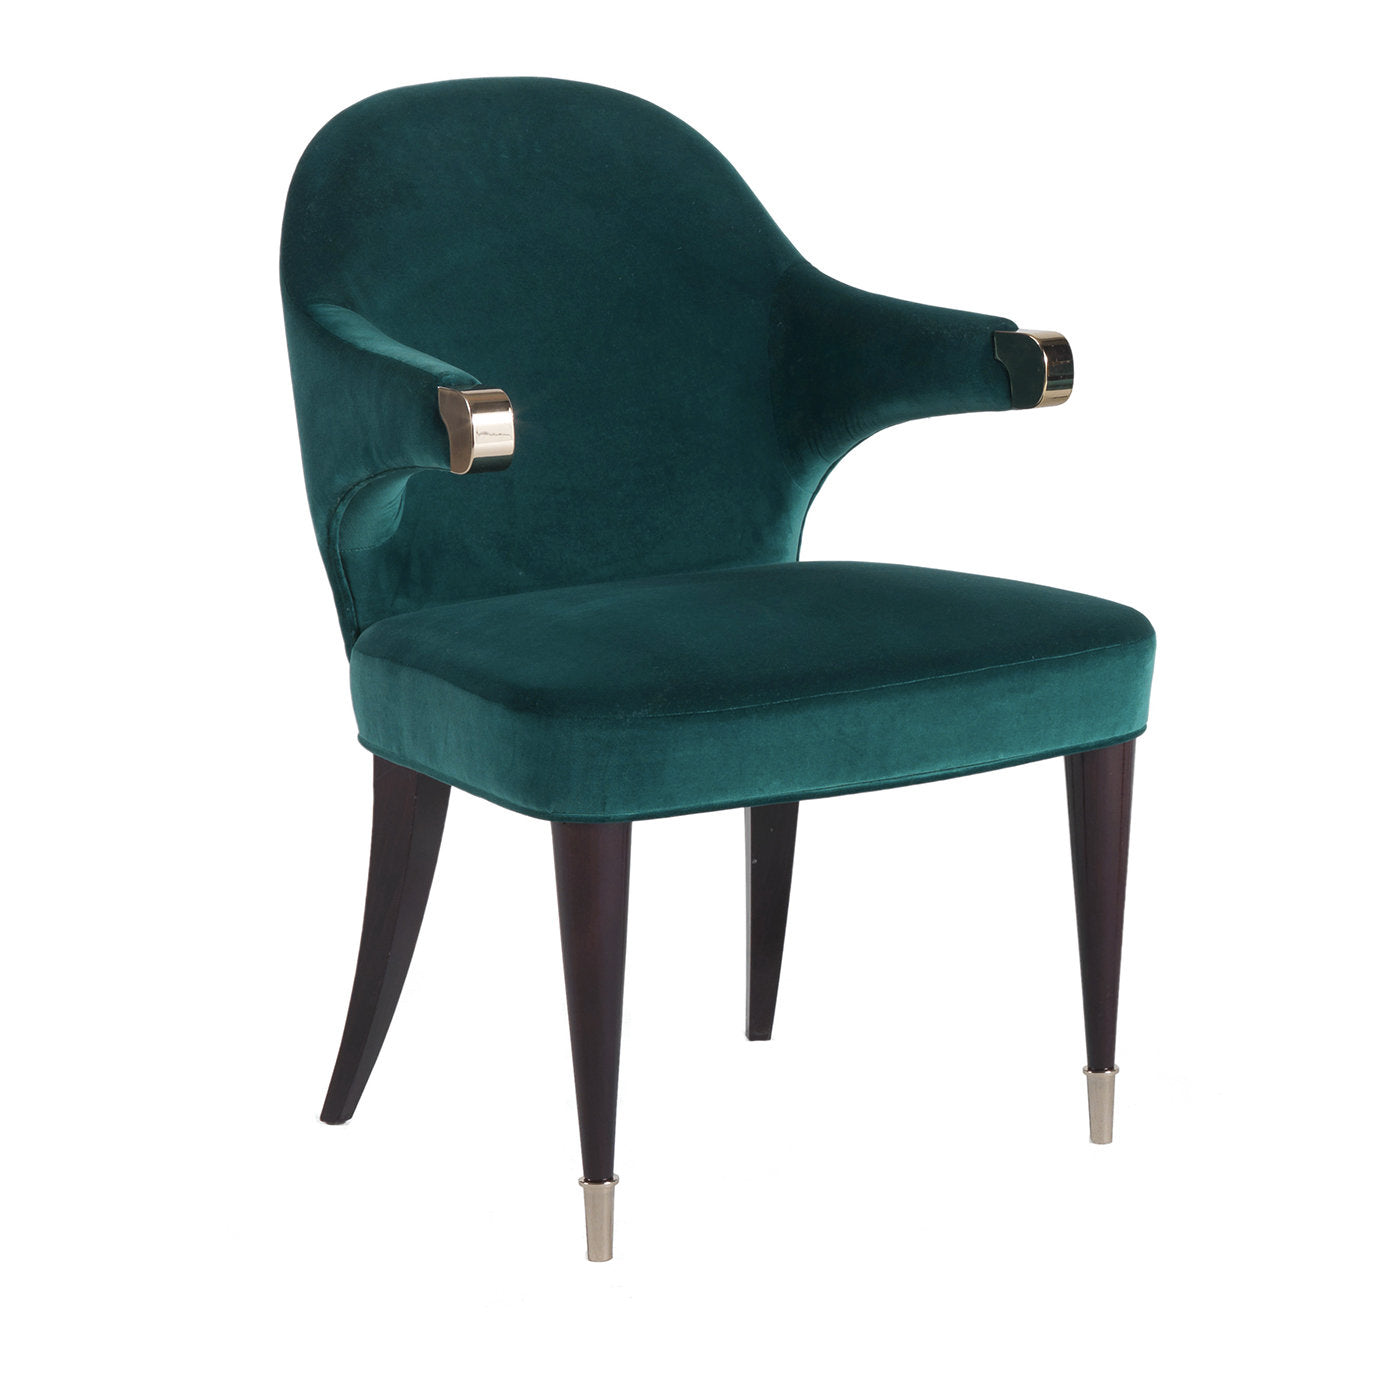 P/5090 Dark Green Chair - Alternative view 1